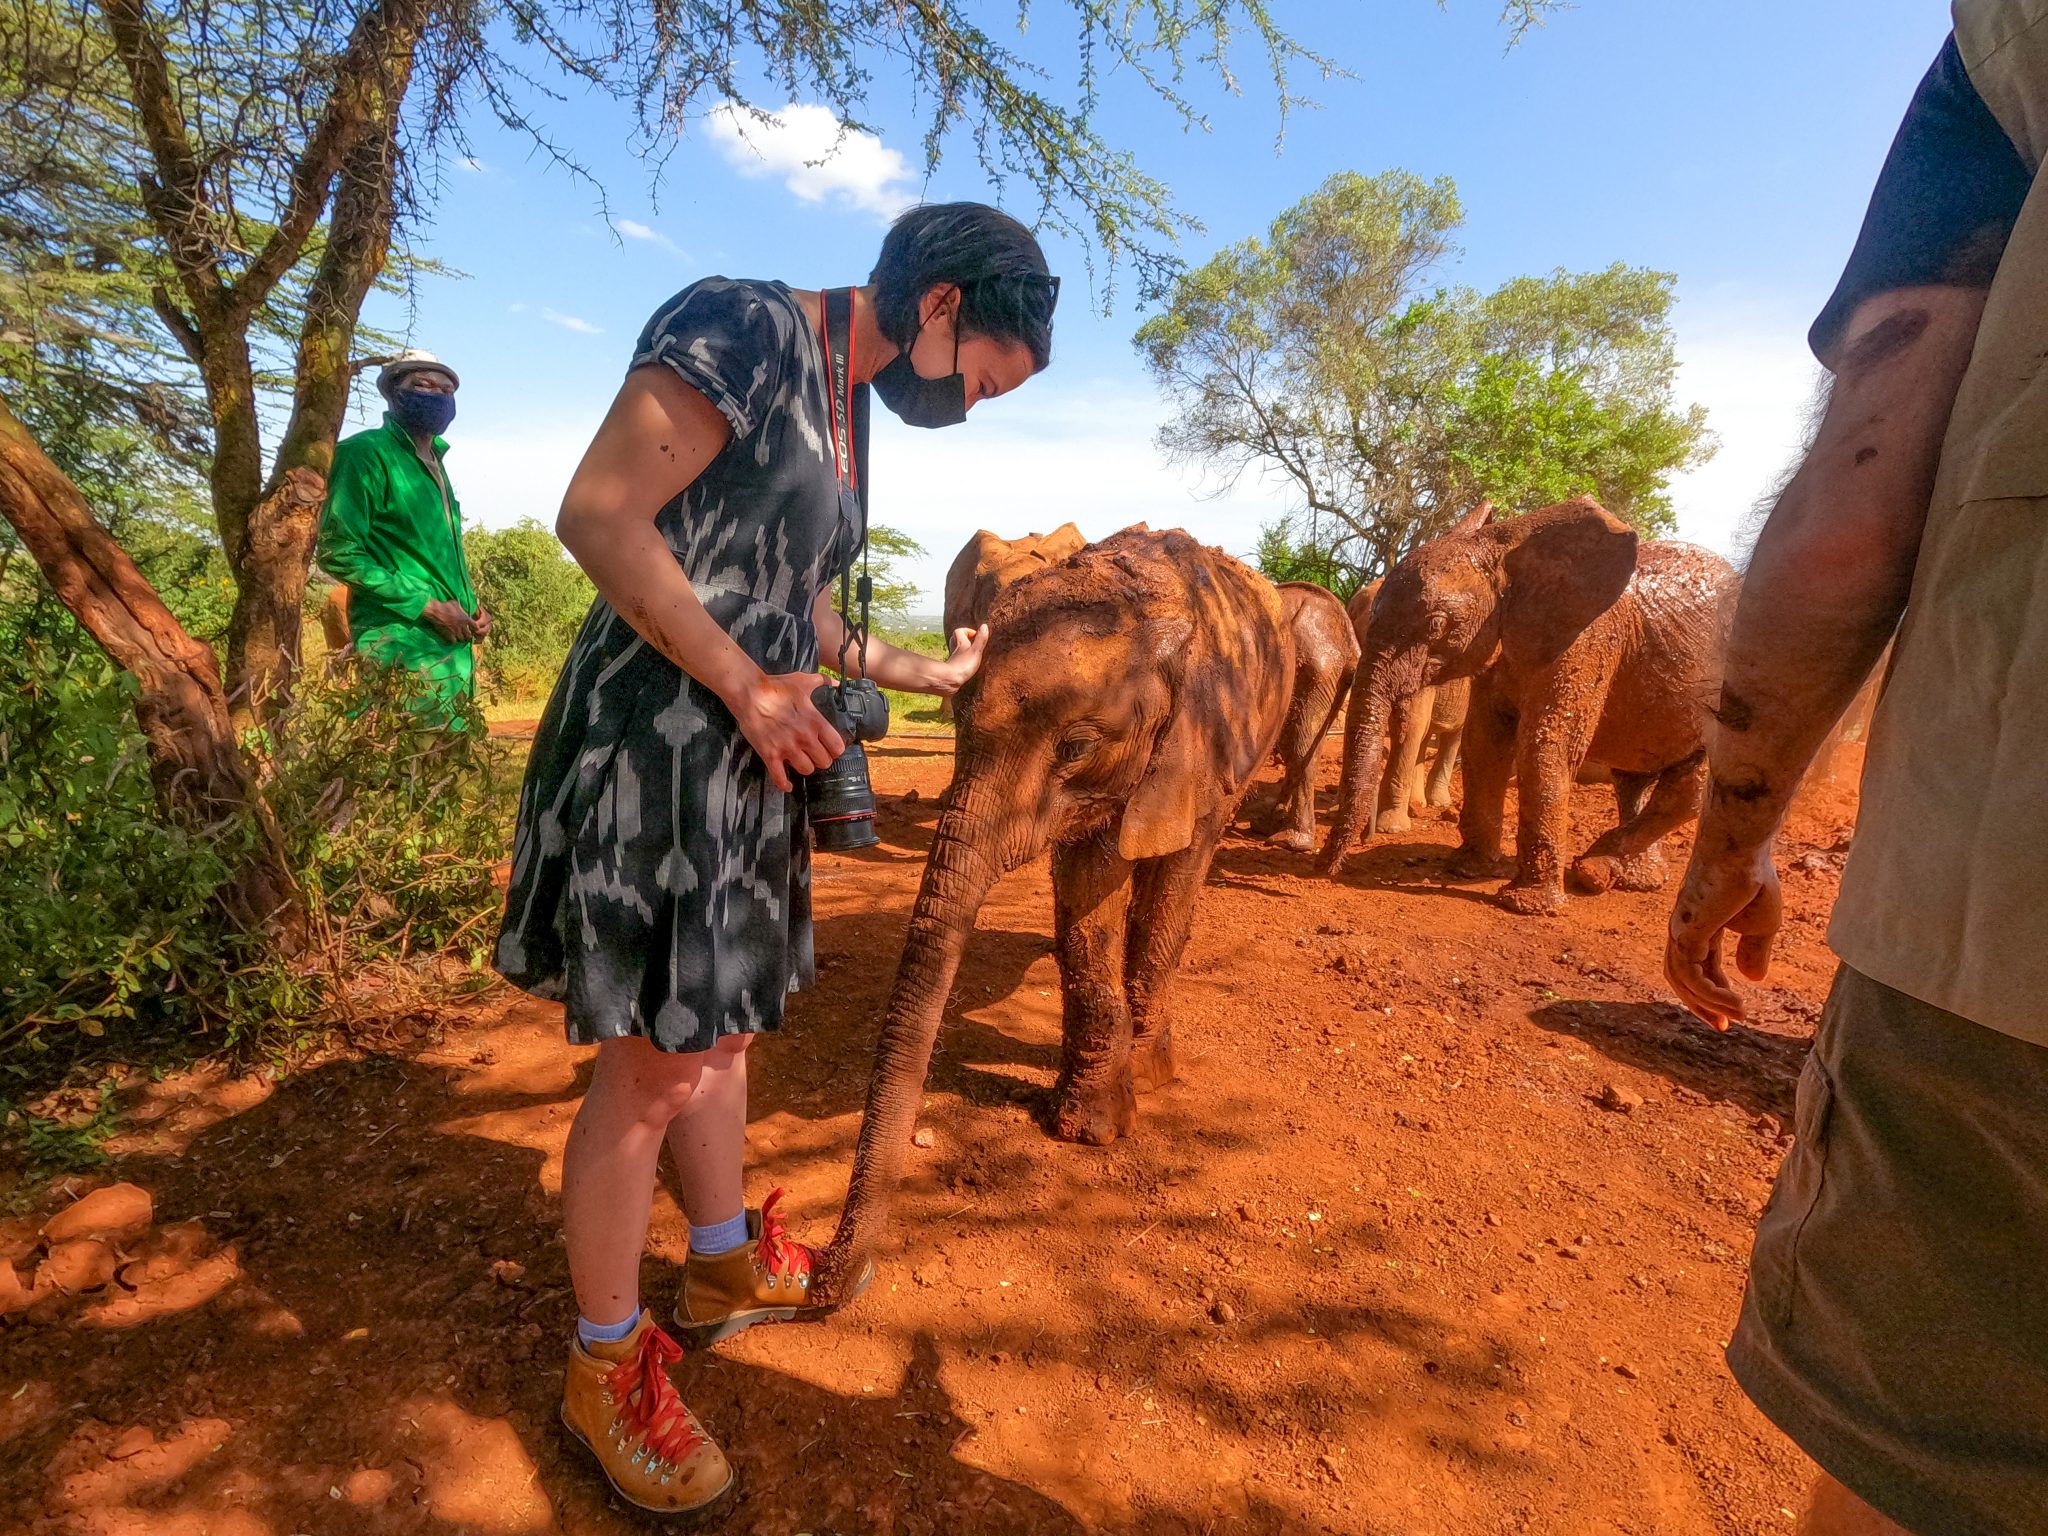 Our private visit to the Sheldrick Wildlife Trust in Nairobi Kenya